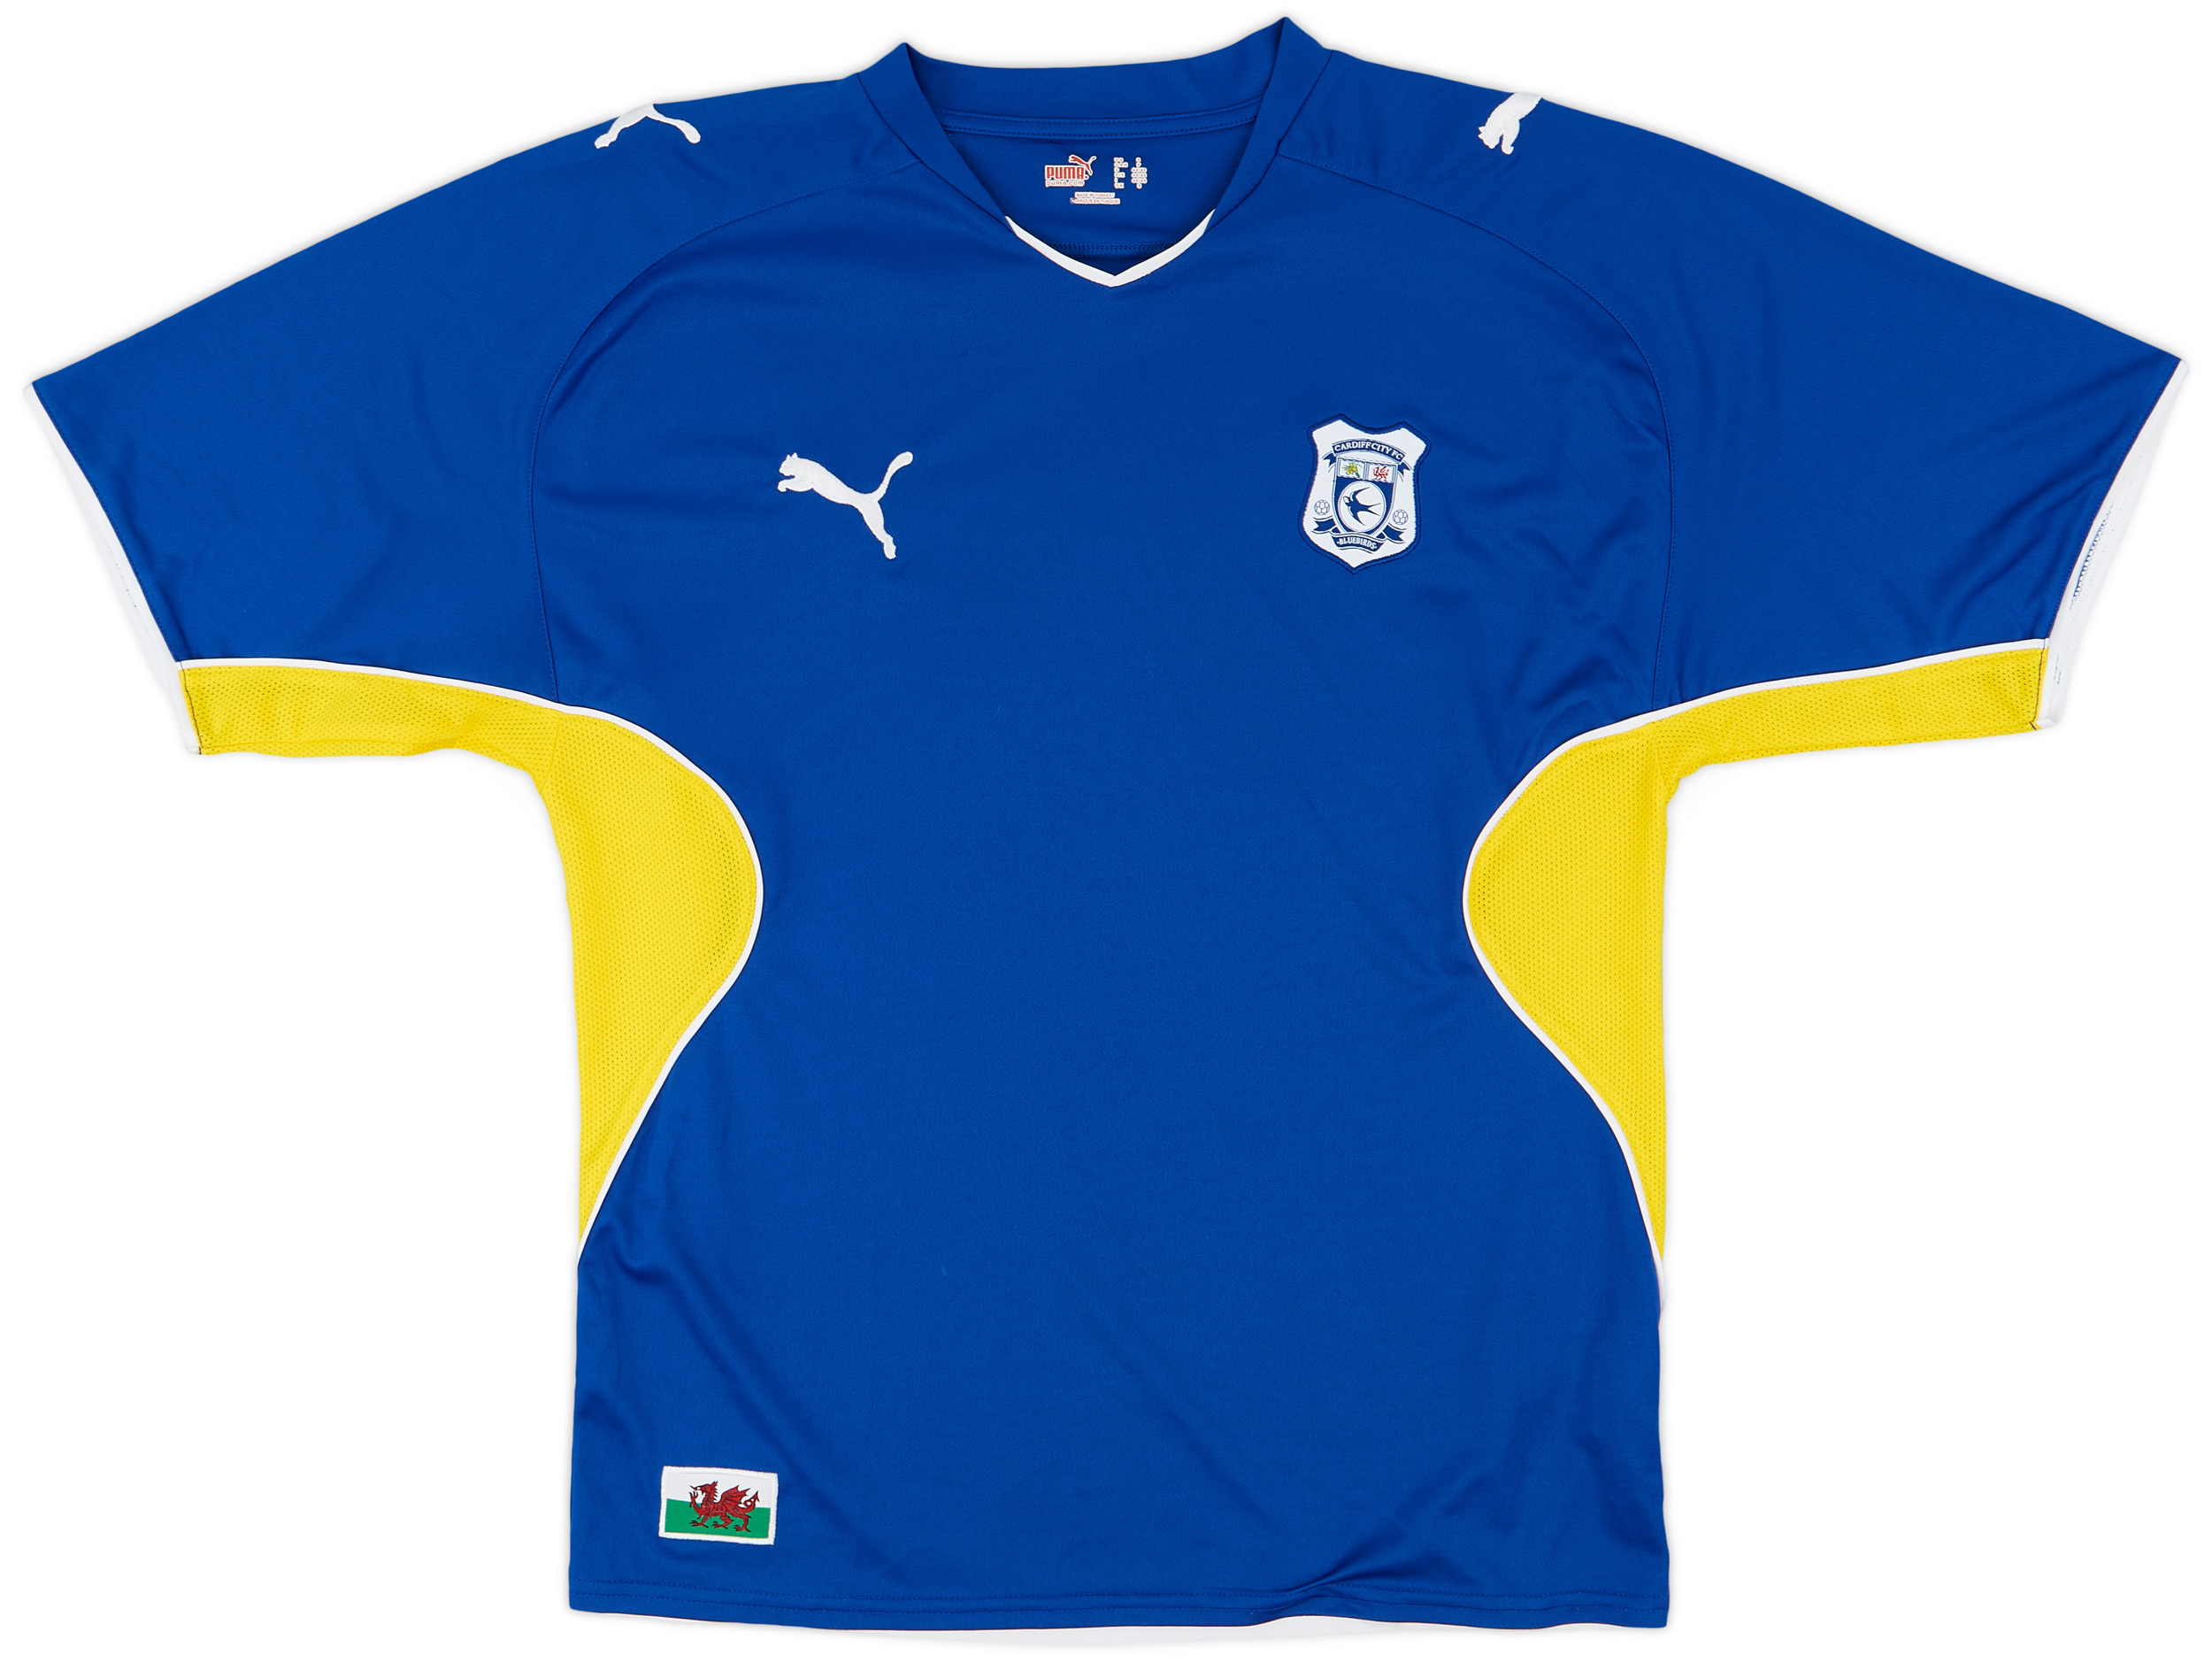 2009-10 Cardiff City Home Shirt - 8/10 - ()